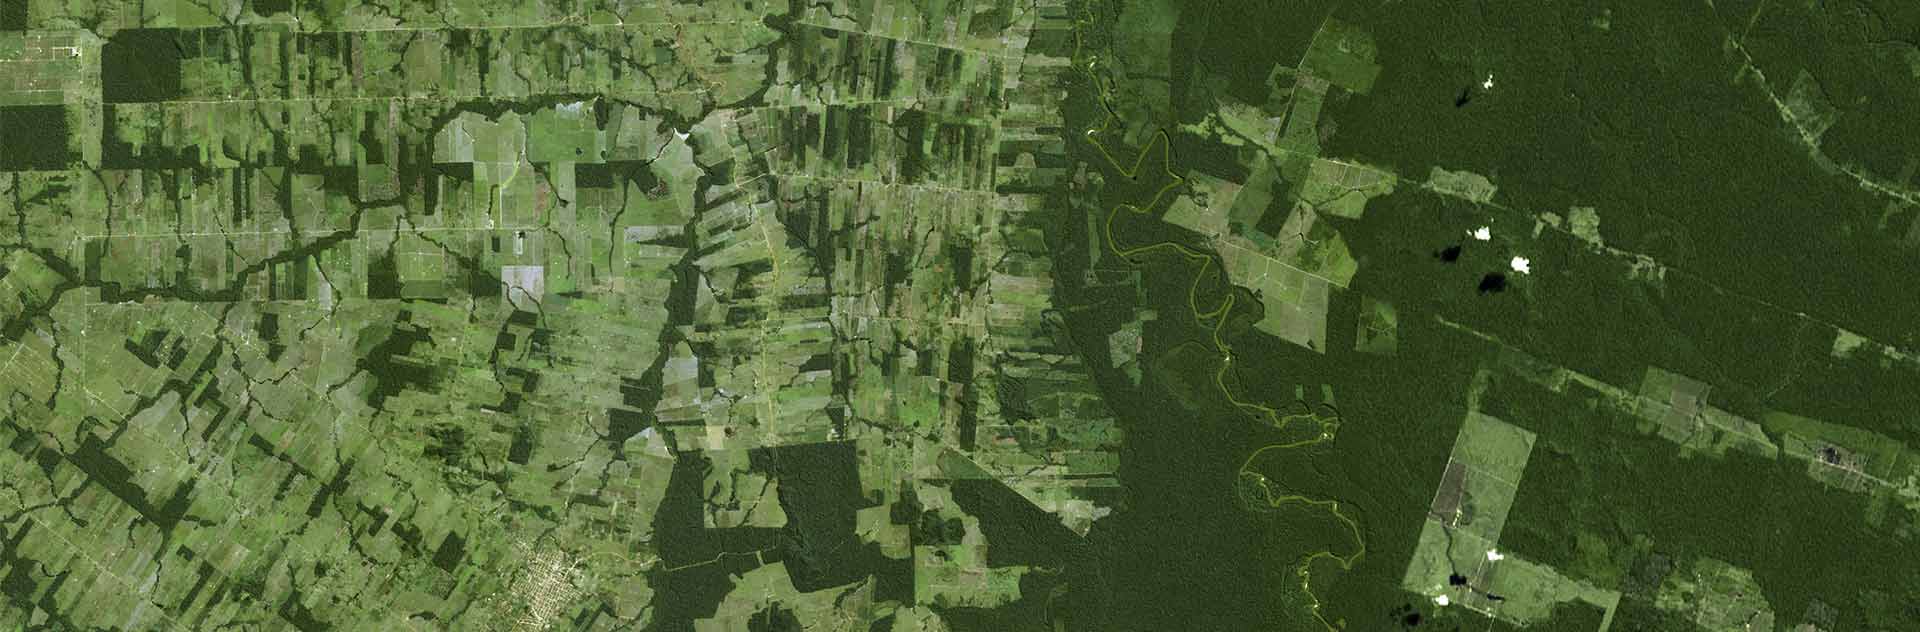 SPOT 7 satellite image - 1.5m resolution